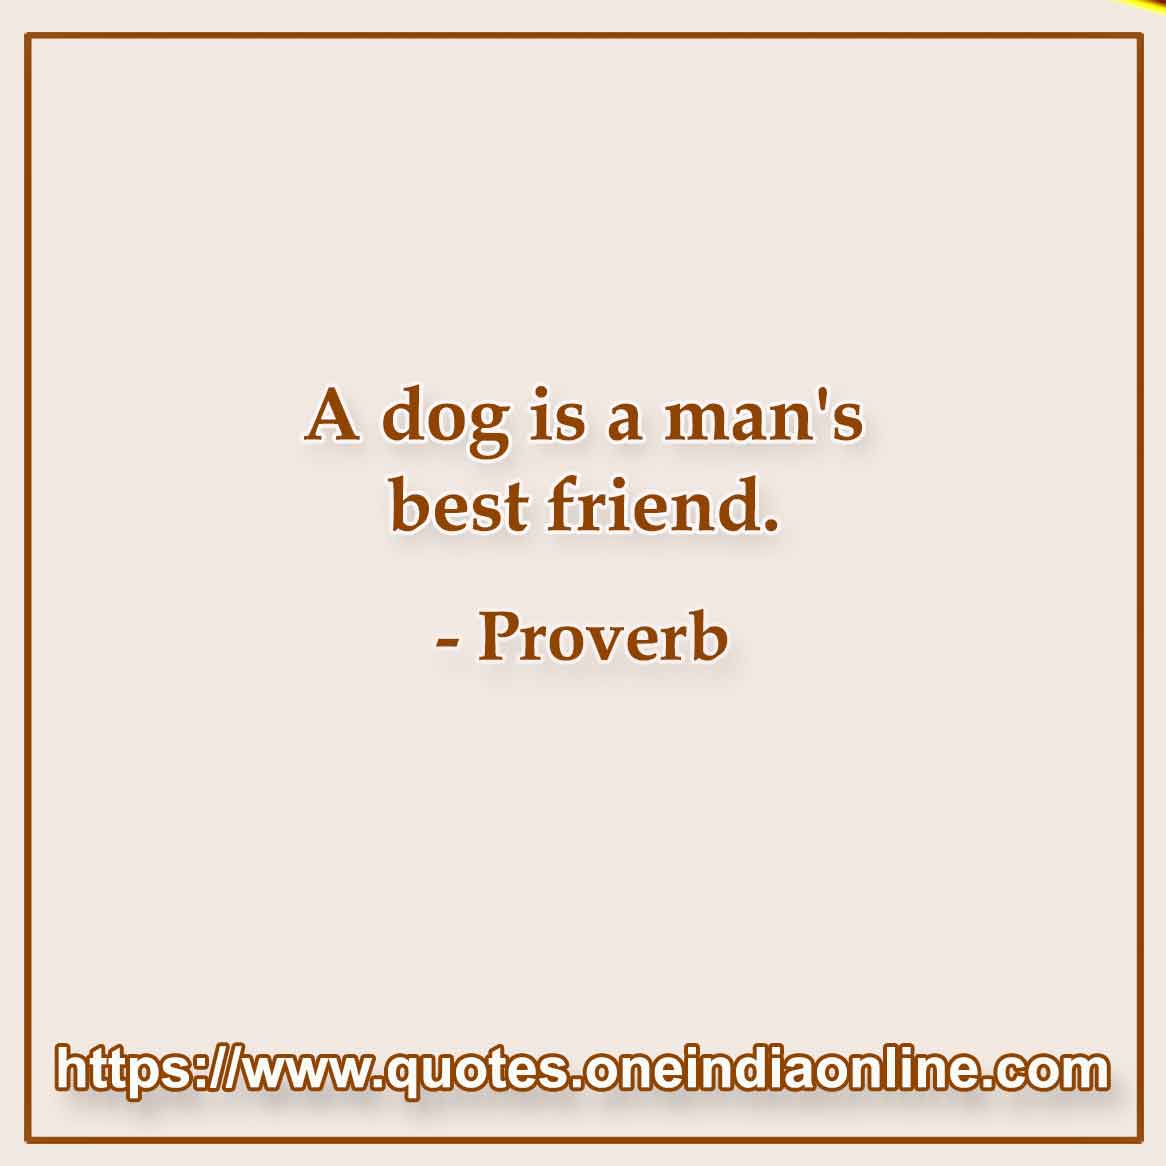 A dog is a man's best friend.

- American